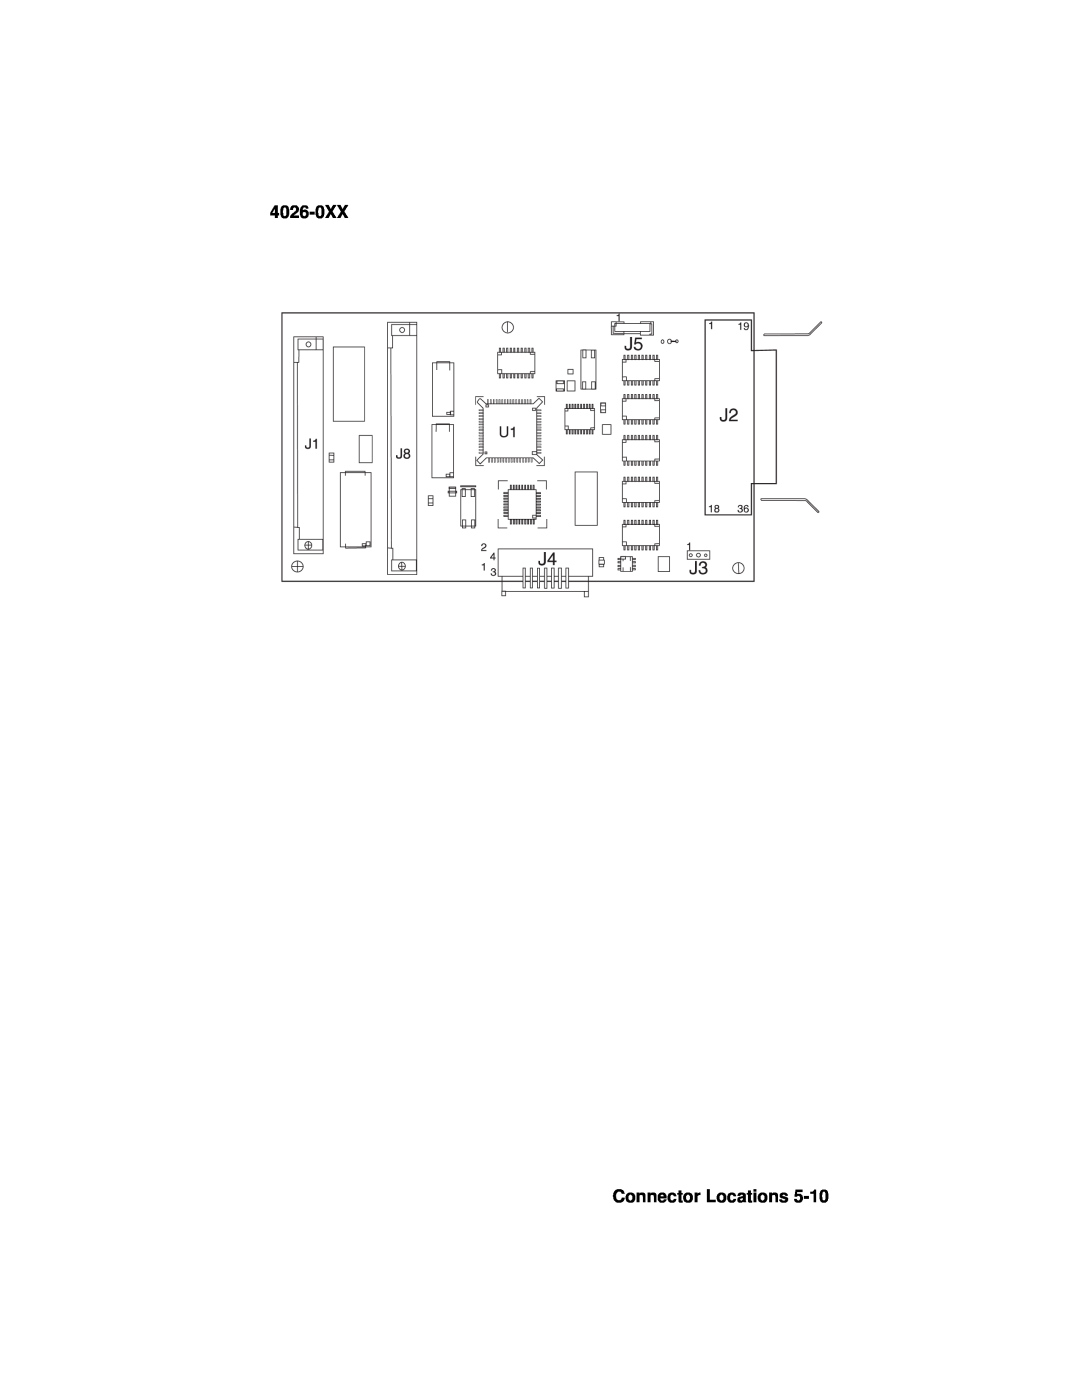 Lexmark OptraTM manual 4026-0XX, Connector Locations 